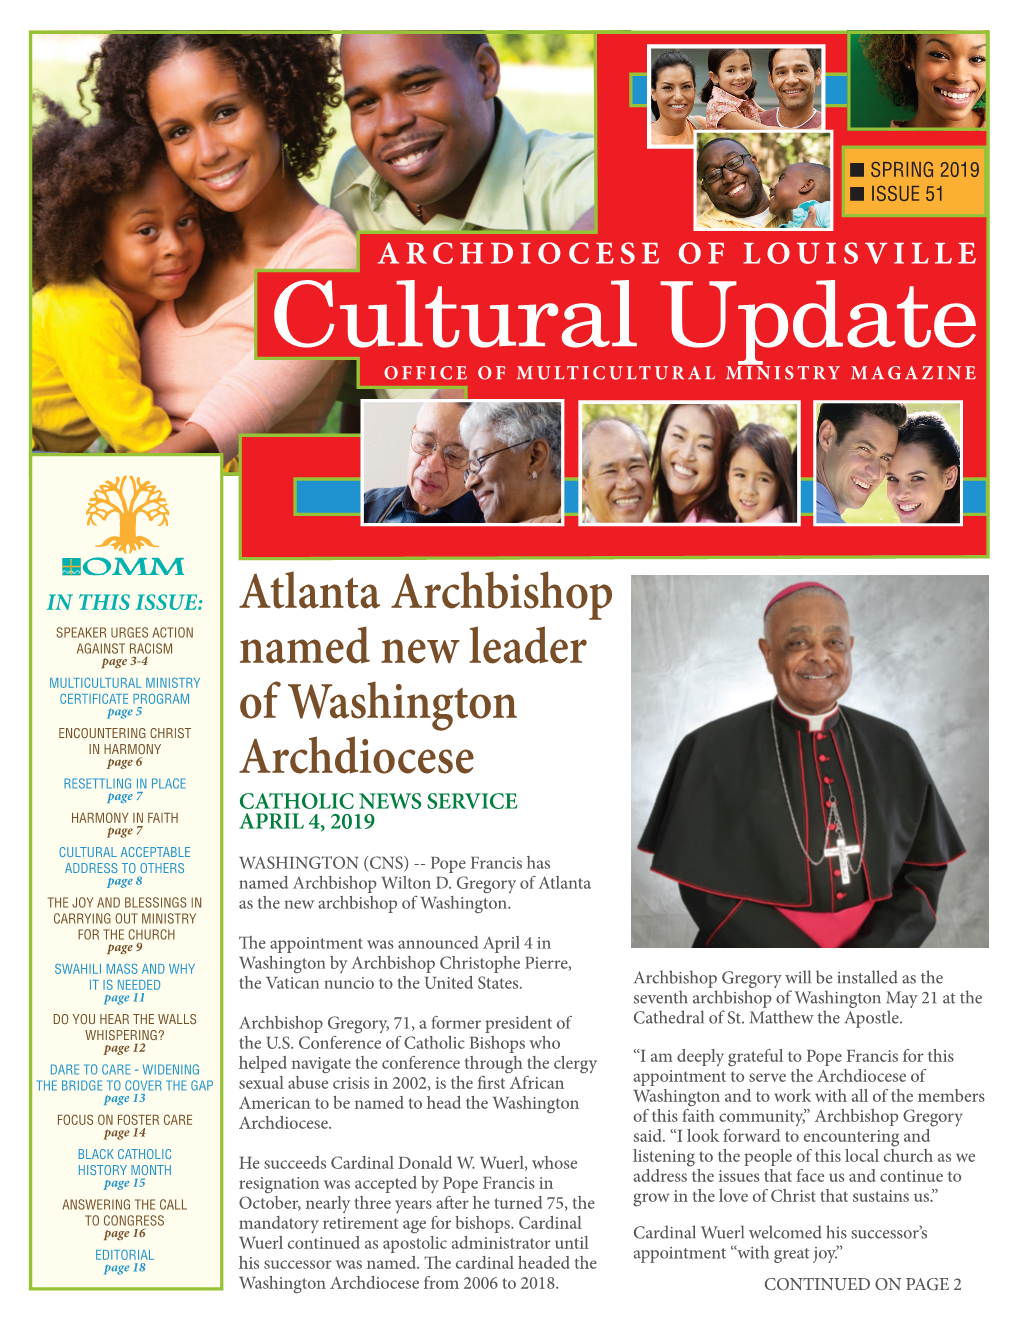 Atlanta Archbishop Named New Leader of Washington Archdiocese